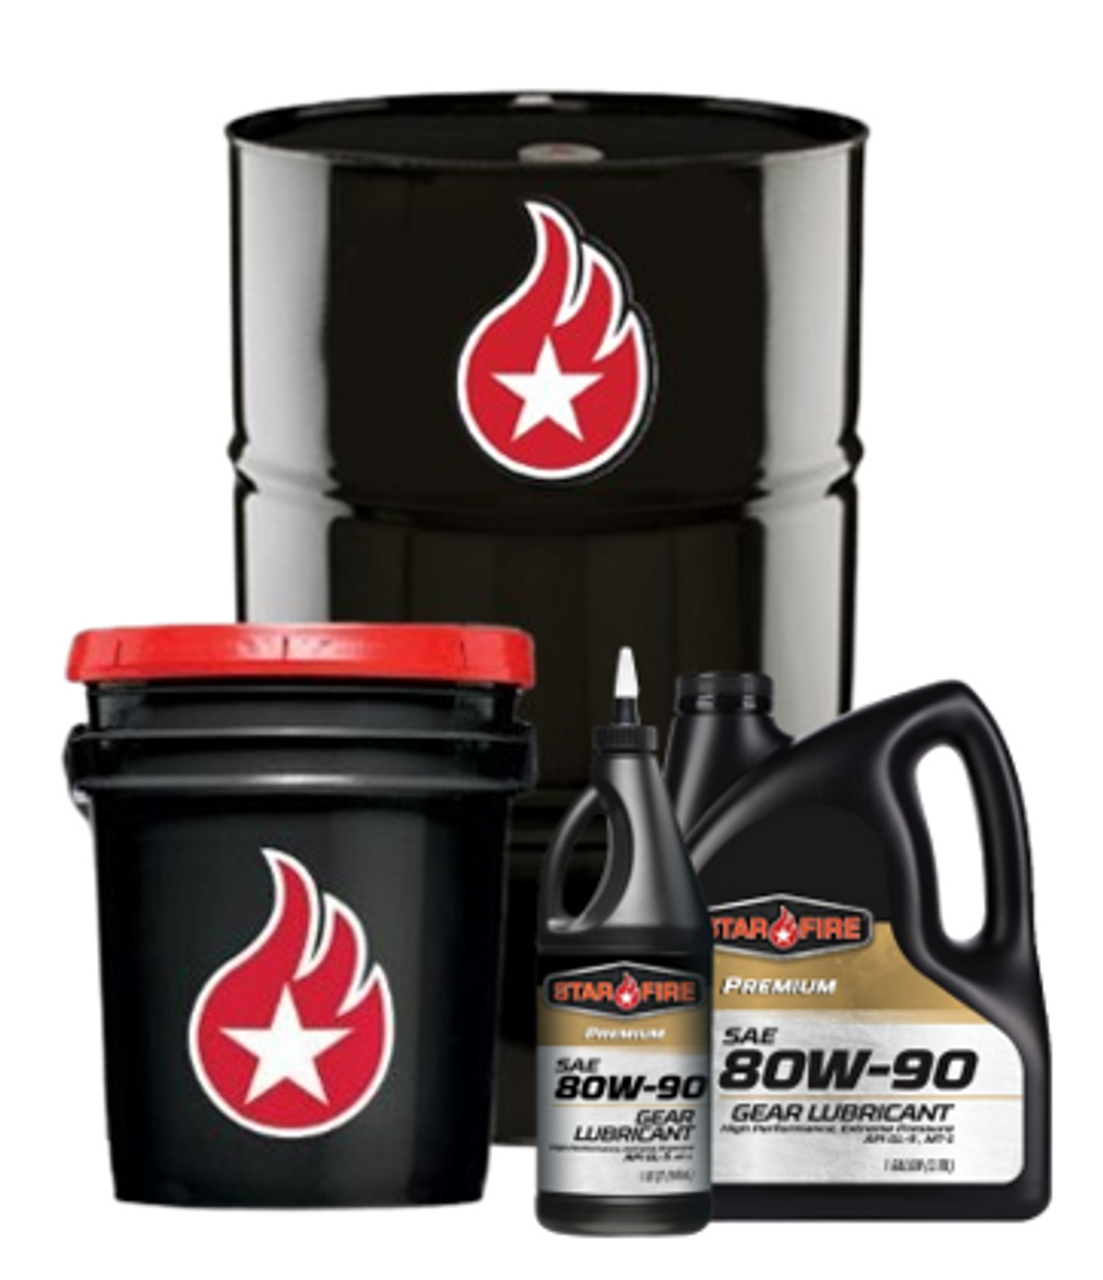 Starfire 80W-90 Conventional Gear Oil